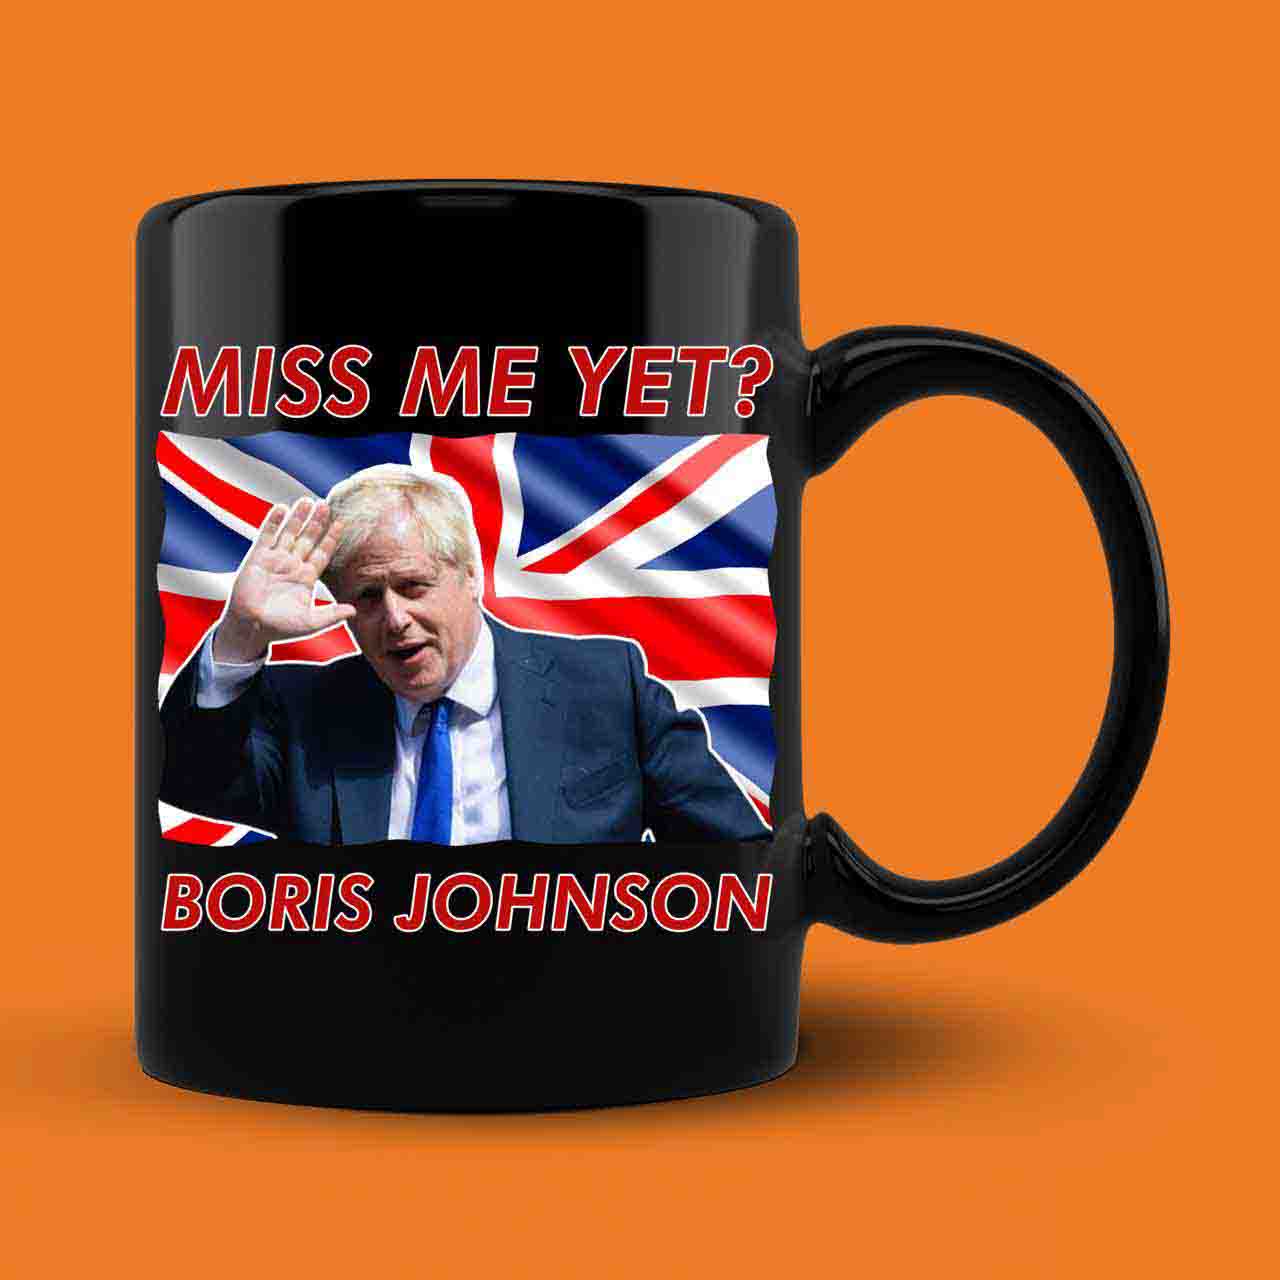 http://bipubunny.com/wp-content/uploads/2022/07/Boris-Johnson-Miss-Me-Yet-Mug.jpg